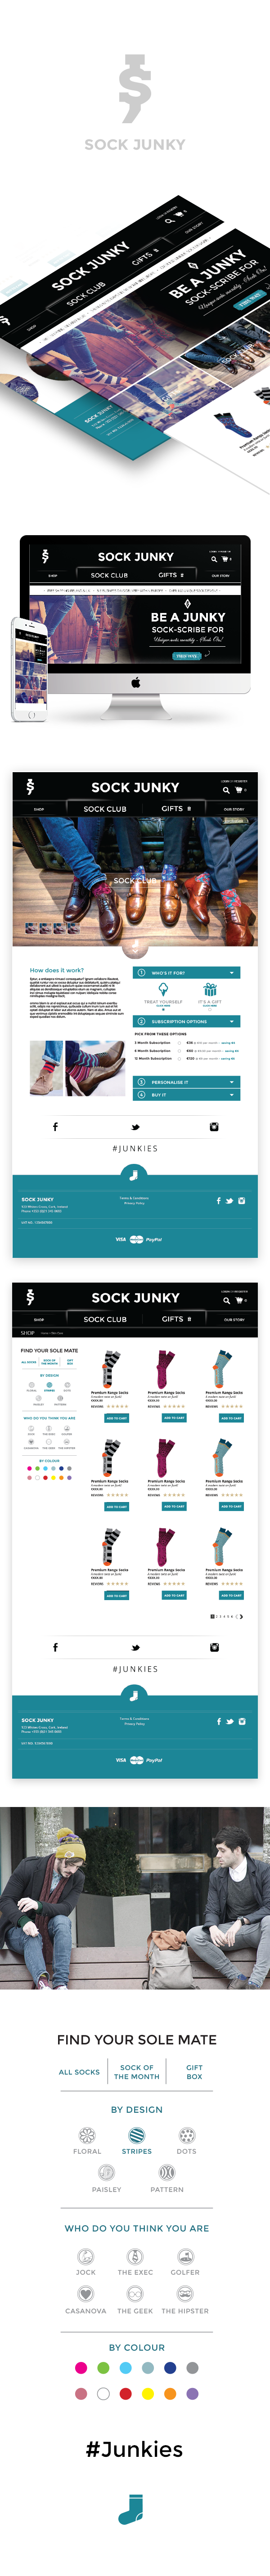 socks store Website funky junky clean modern